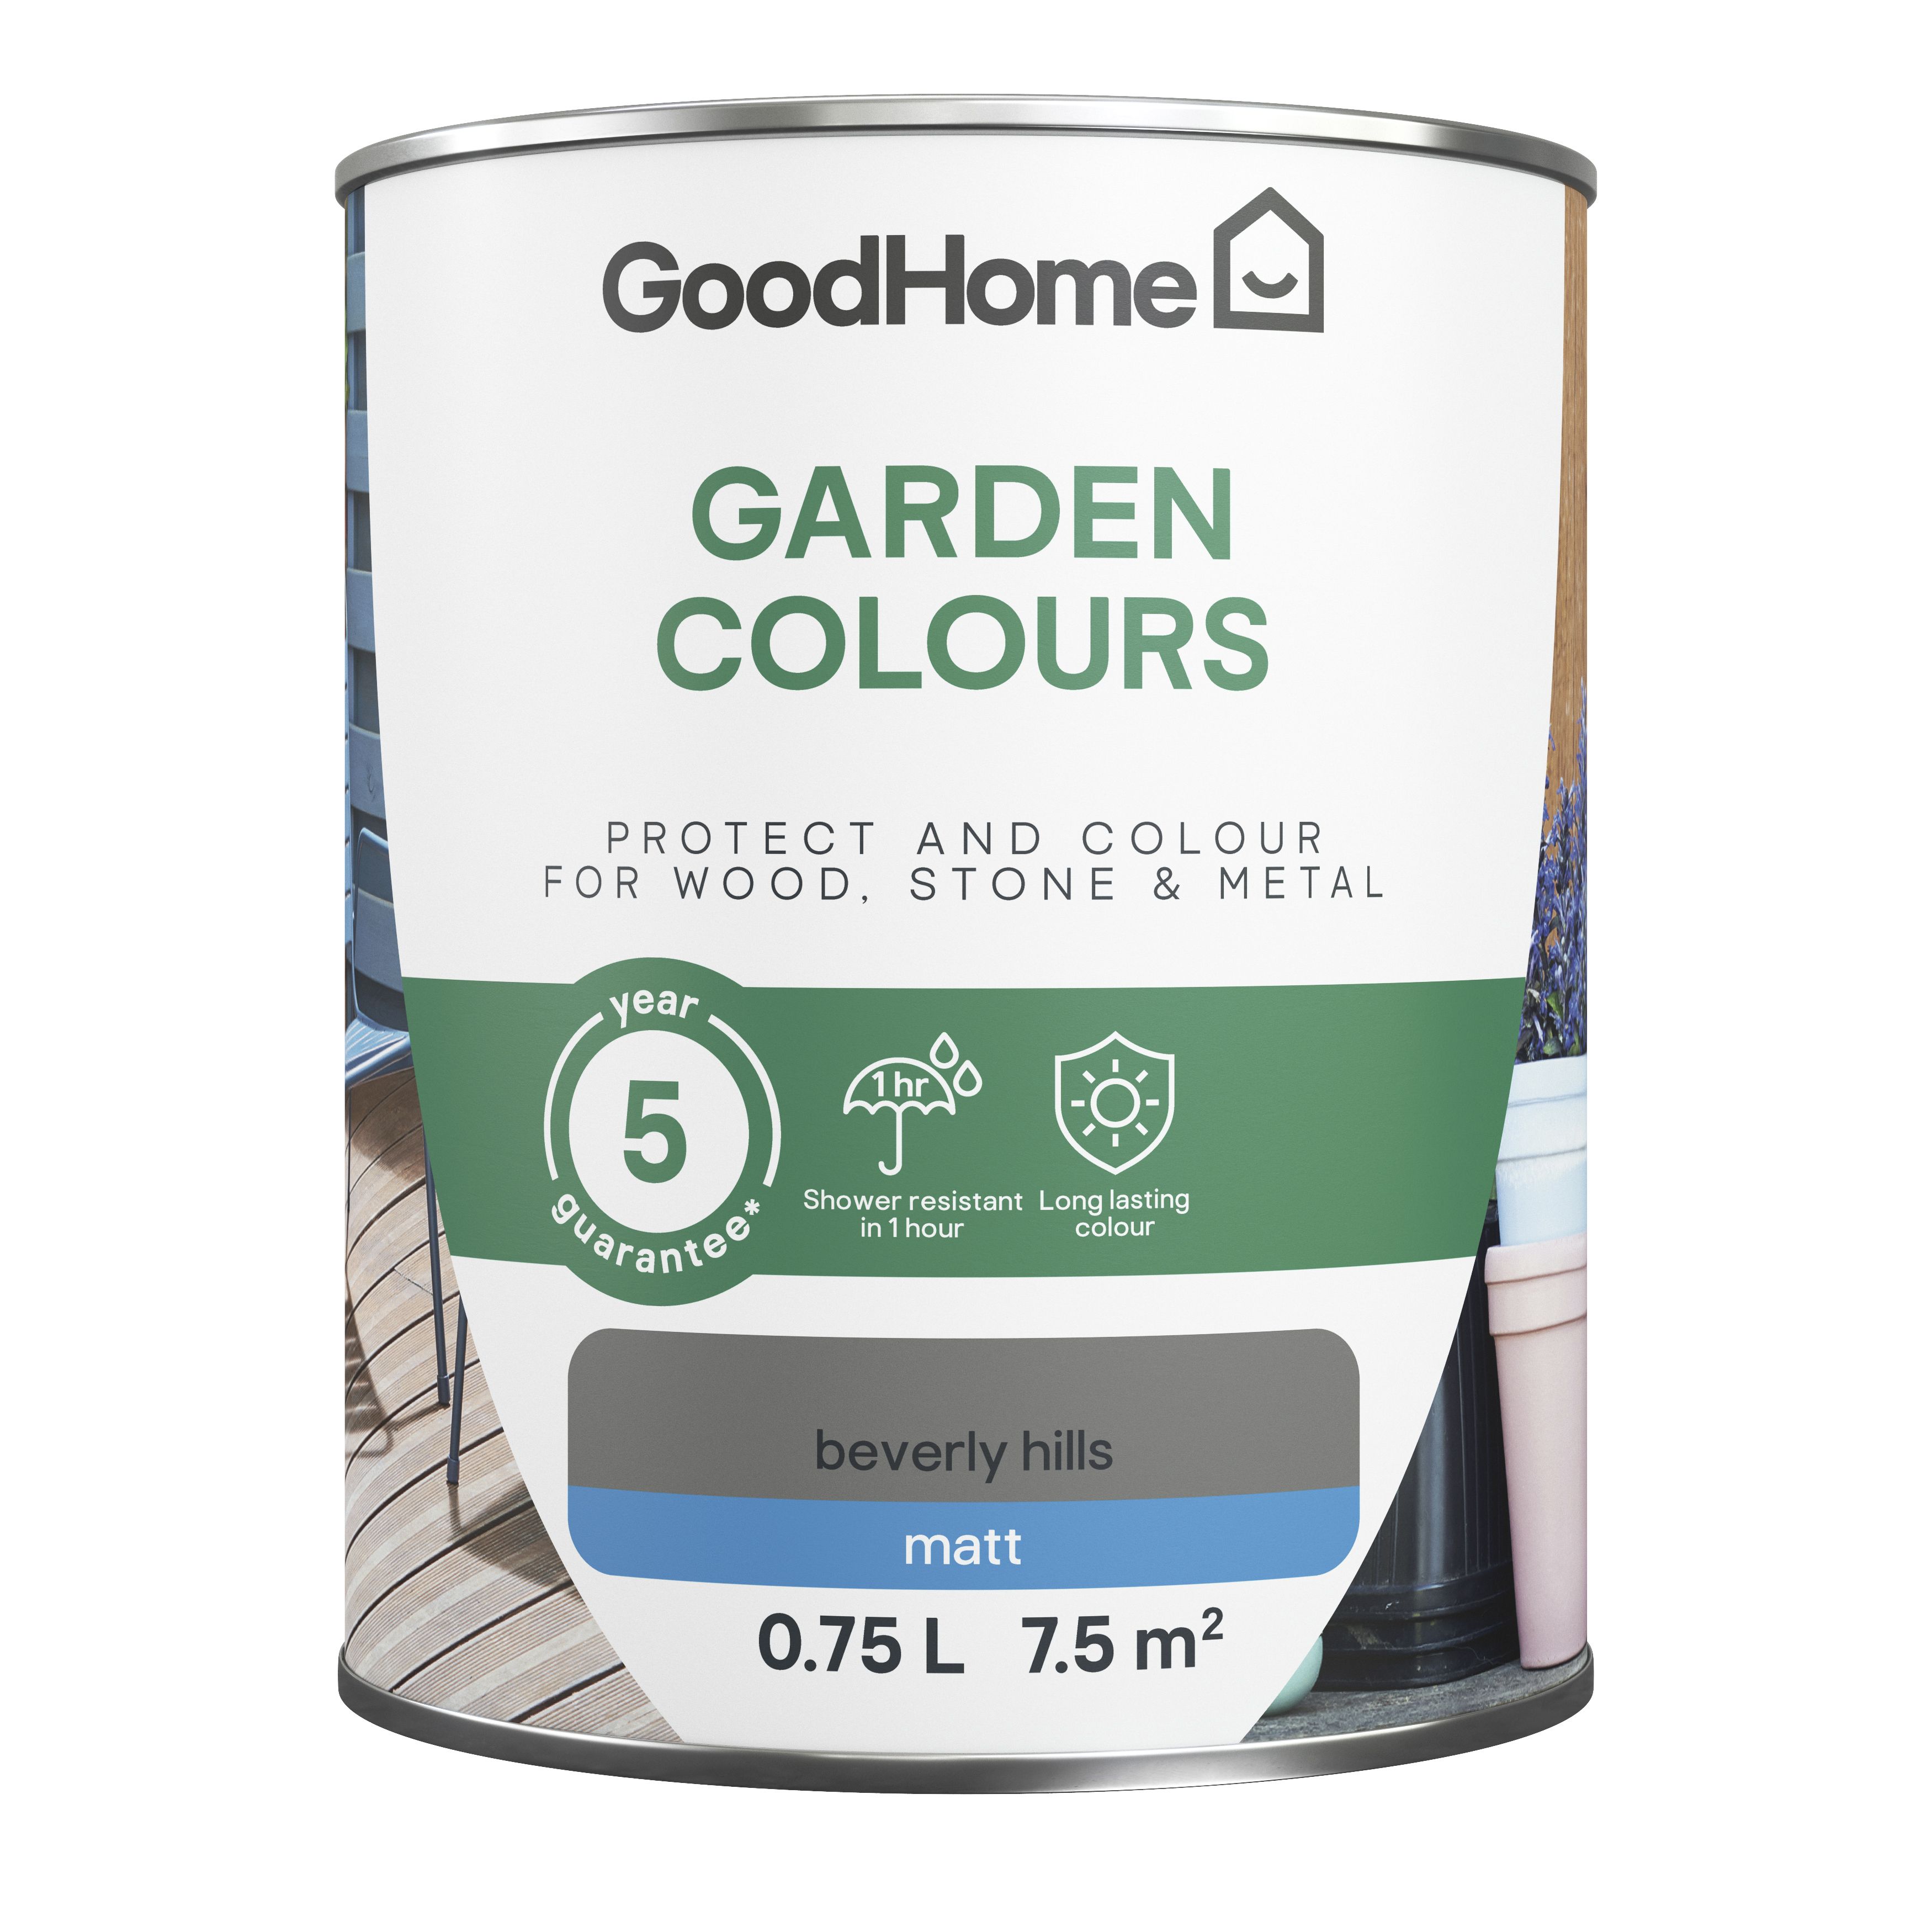 GoodHome Colour It Beverly Hills Matt Multi-surface paint, 750ml